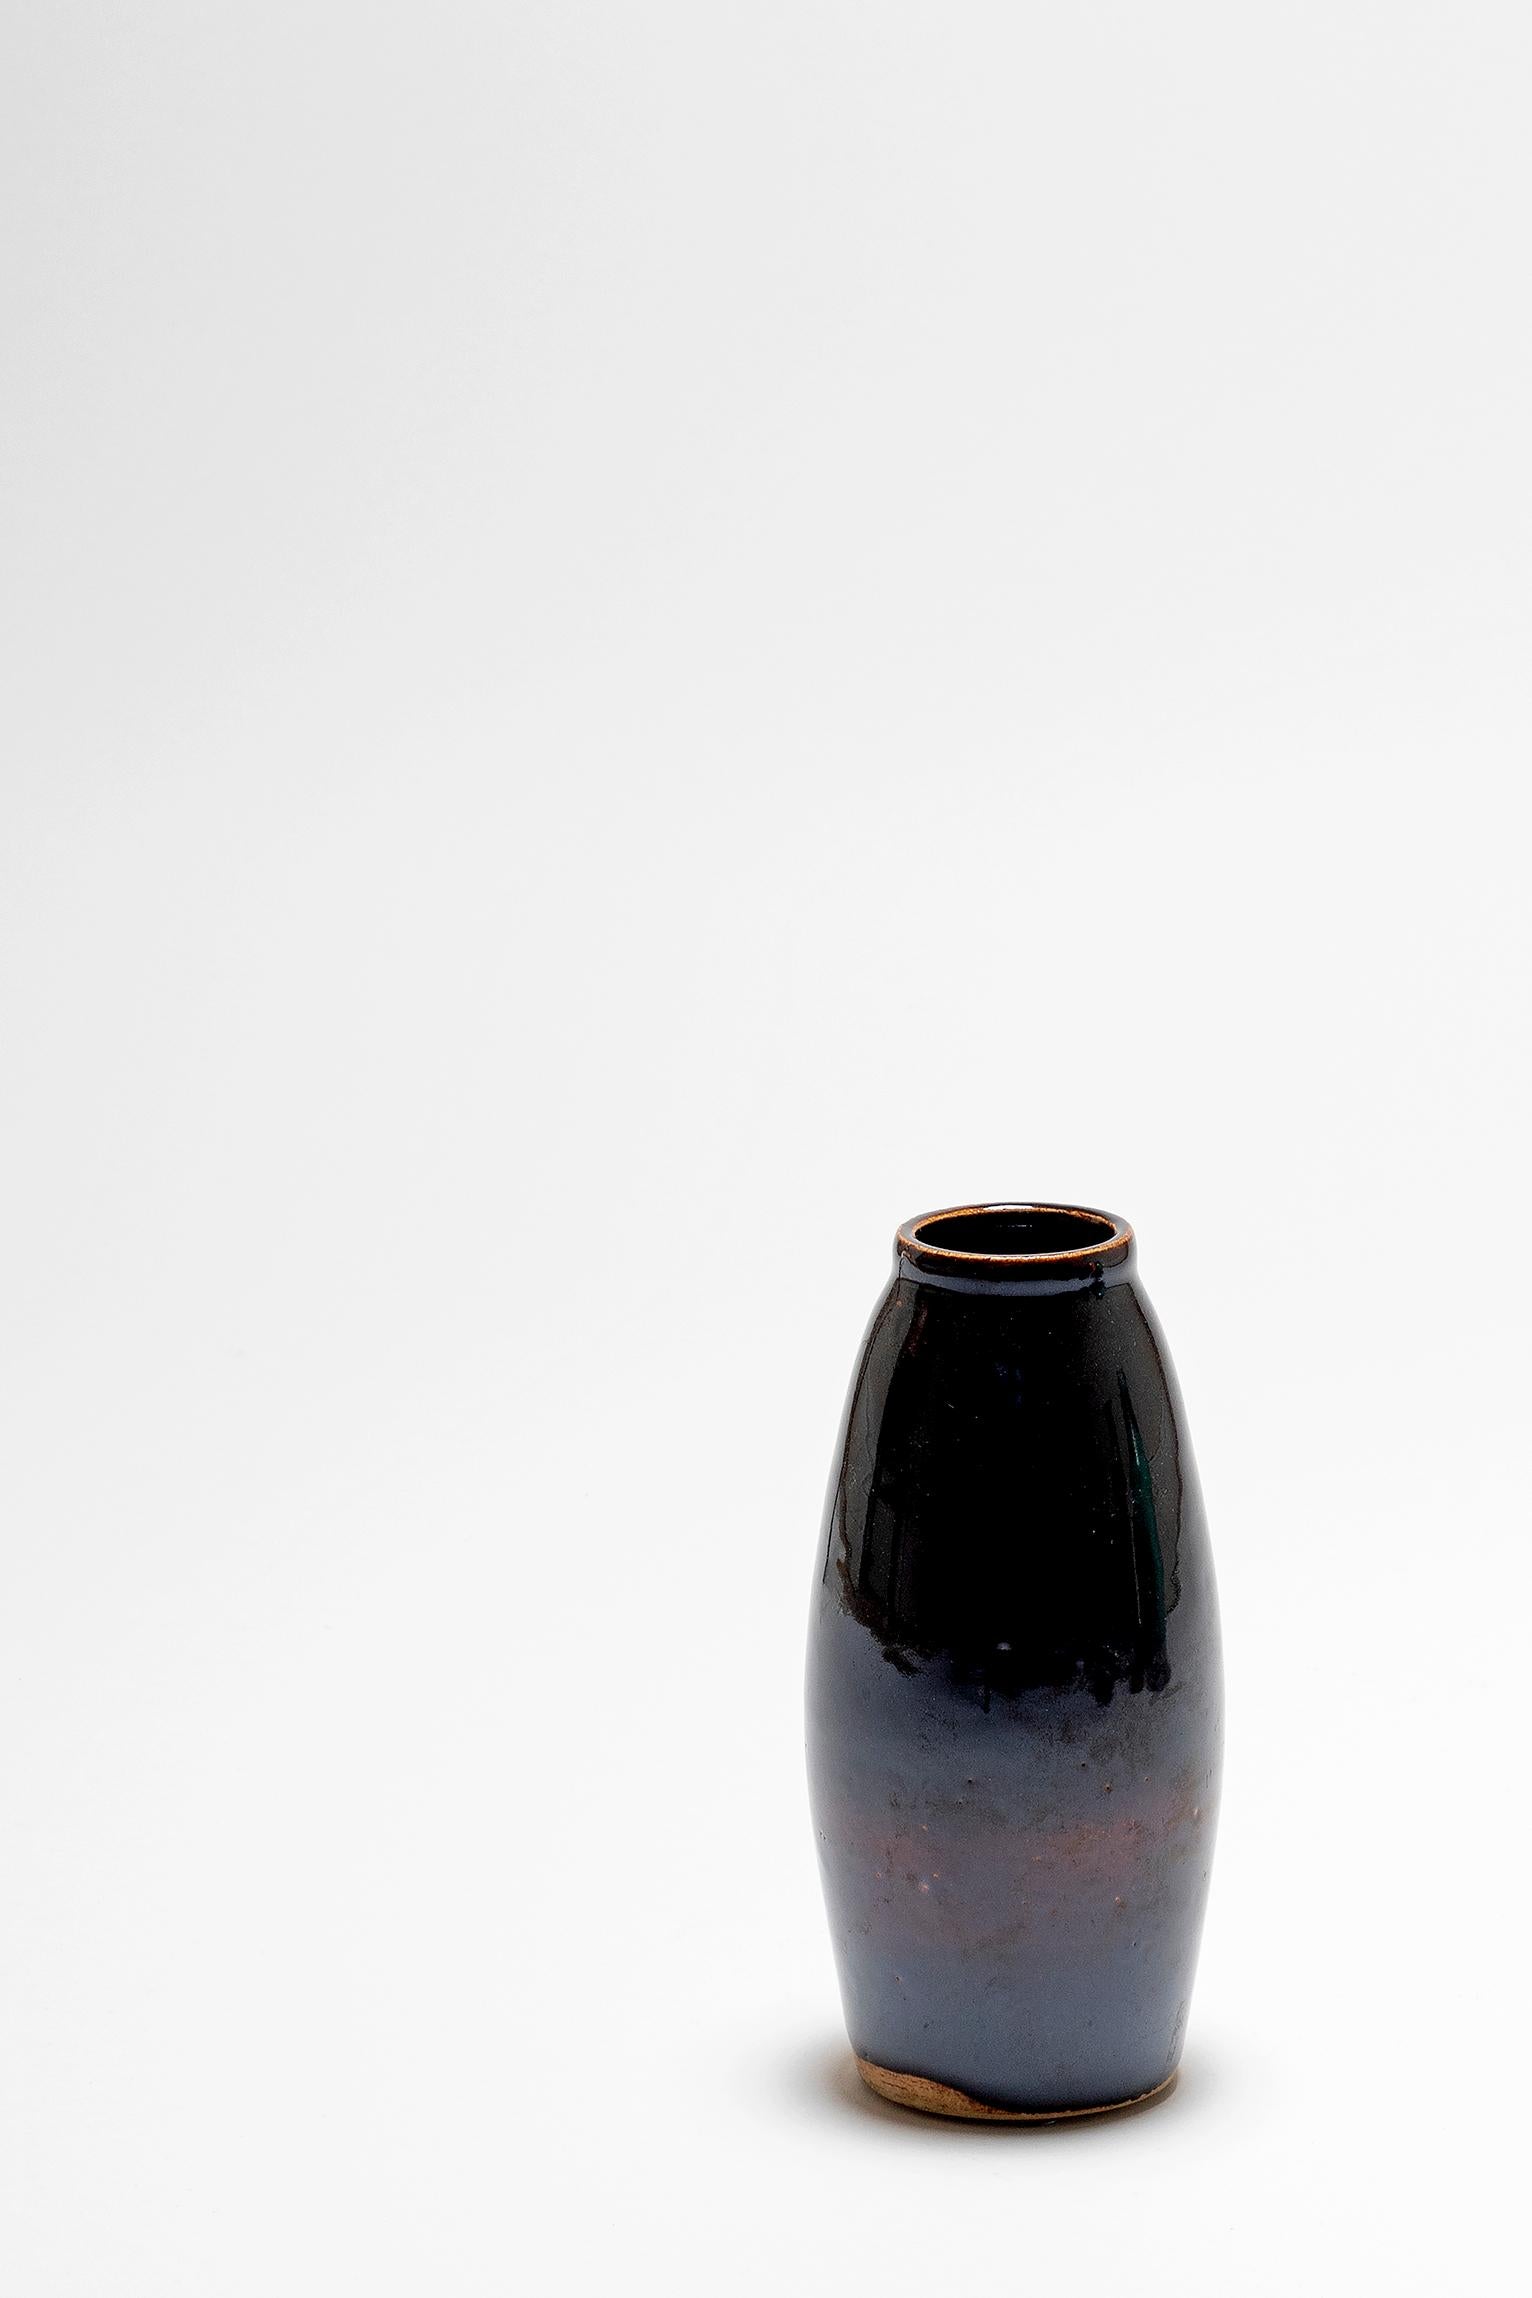 A polychrome ceramic vase
France, second half of the 20th century.